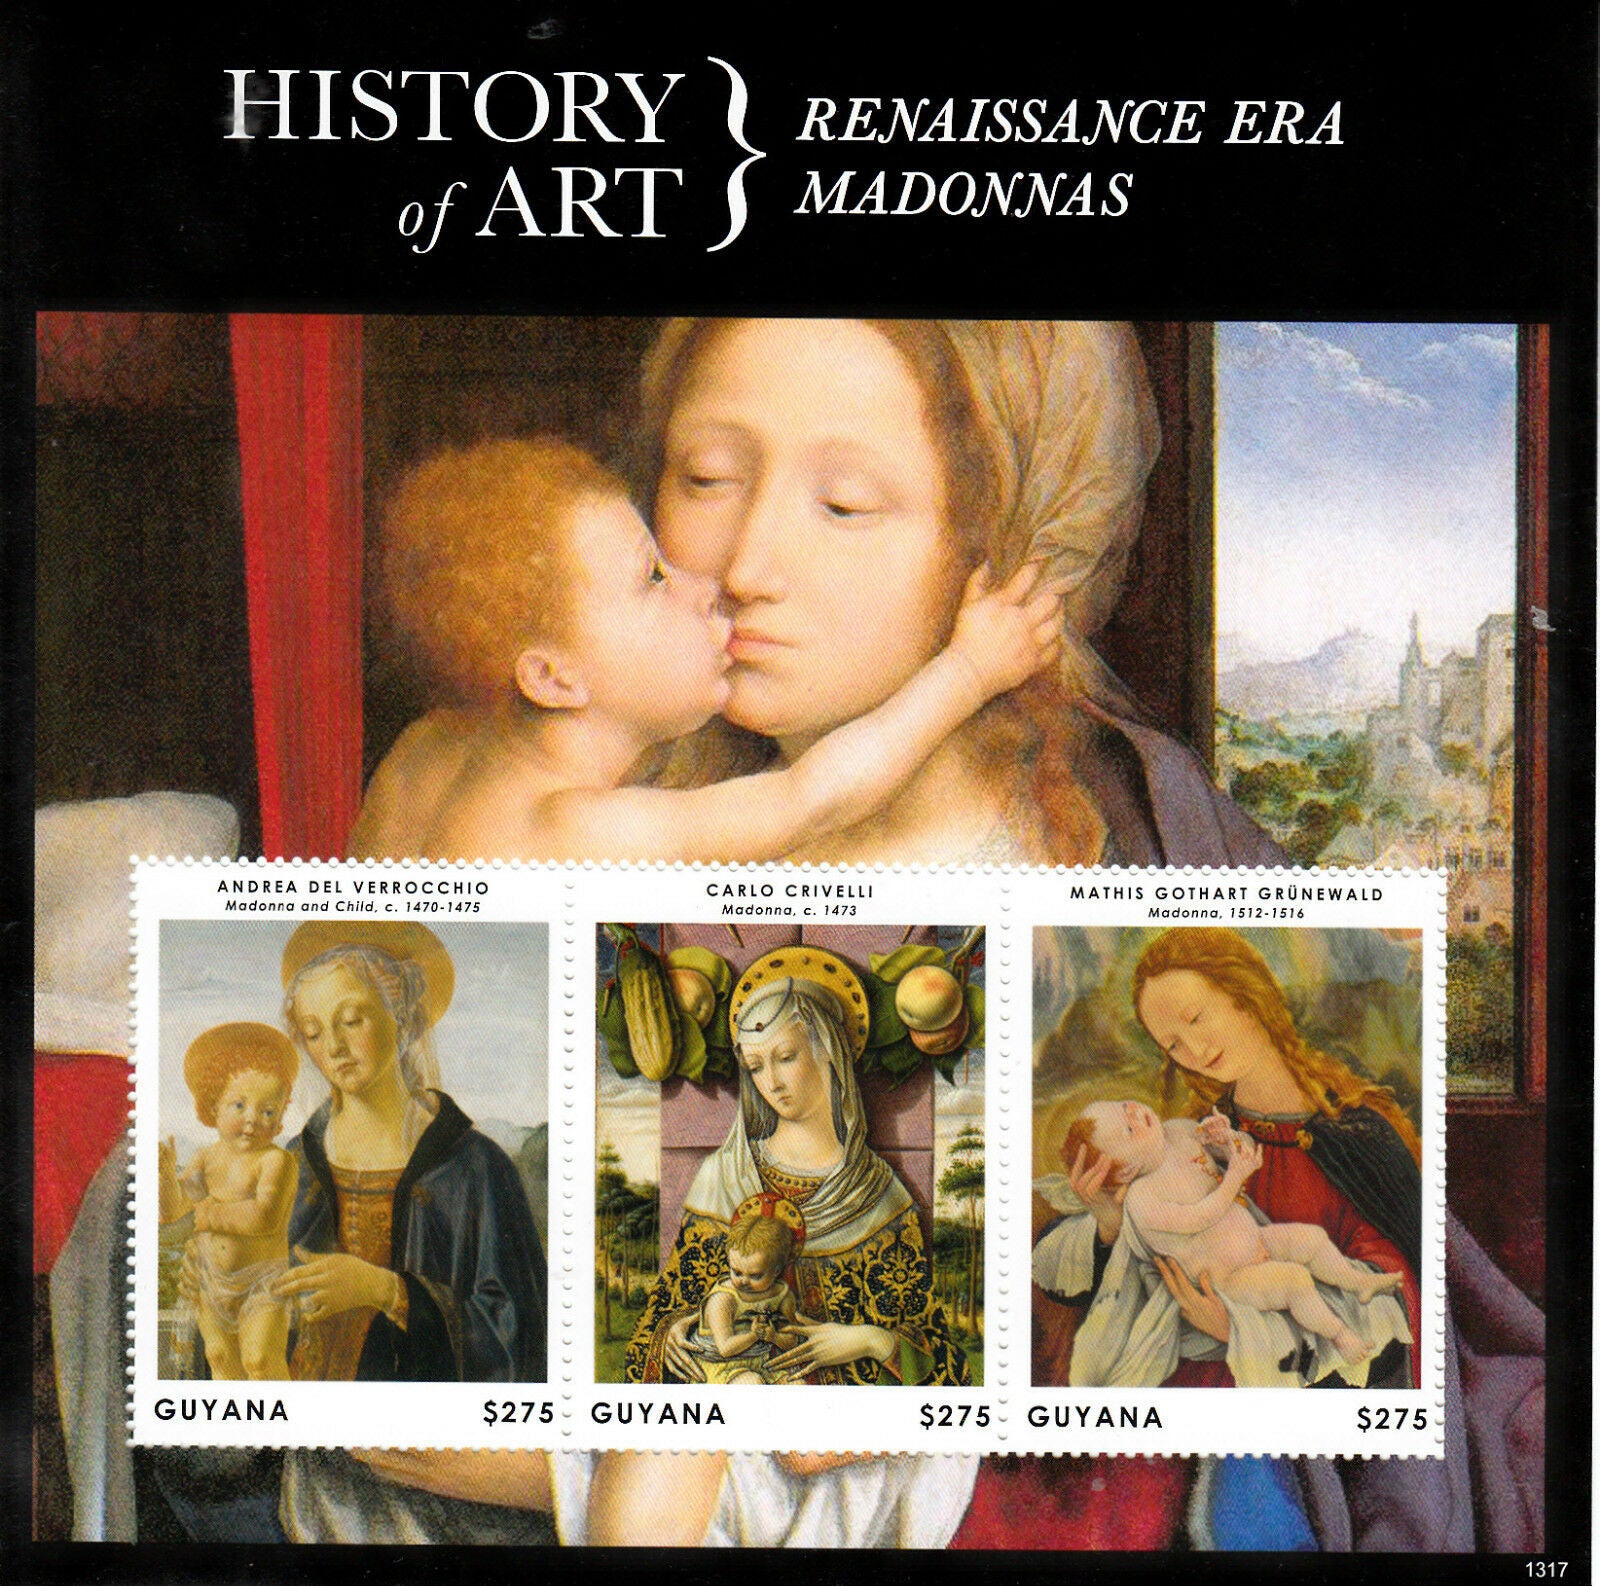 Guyana 2013 MNH History of Art Renaissance Era Madonnas 3v M/S Carlo Crivelli